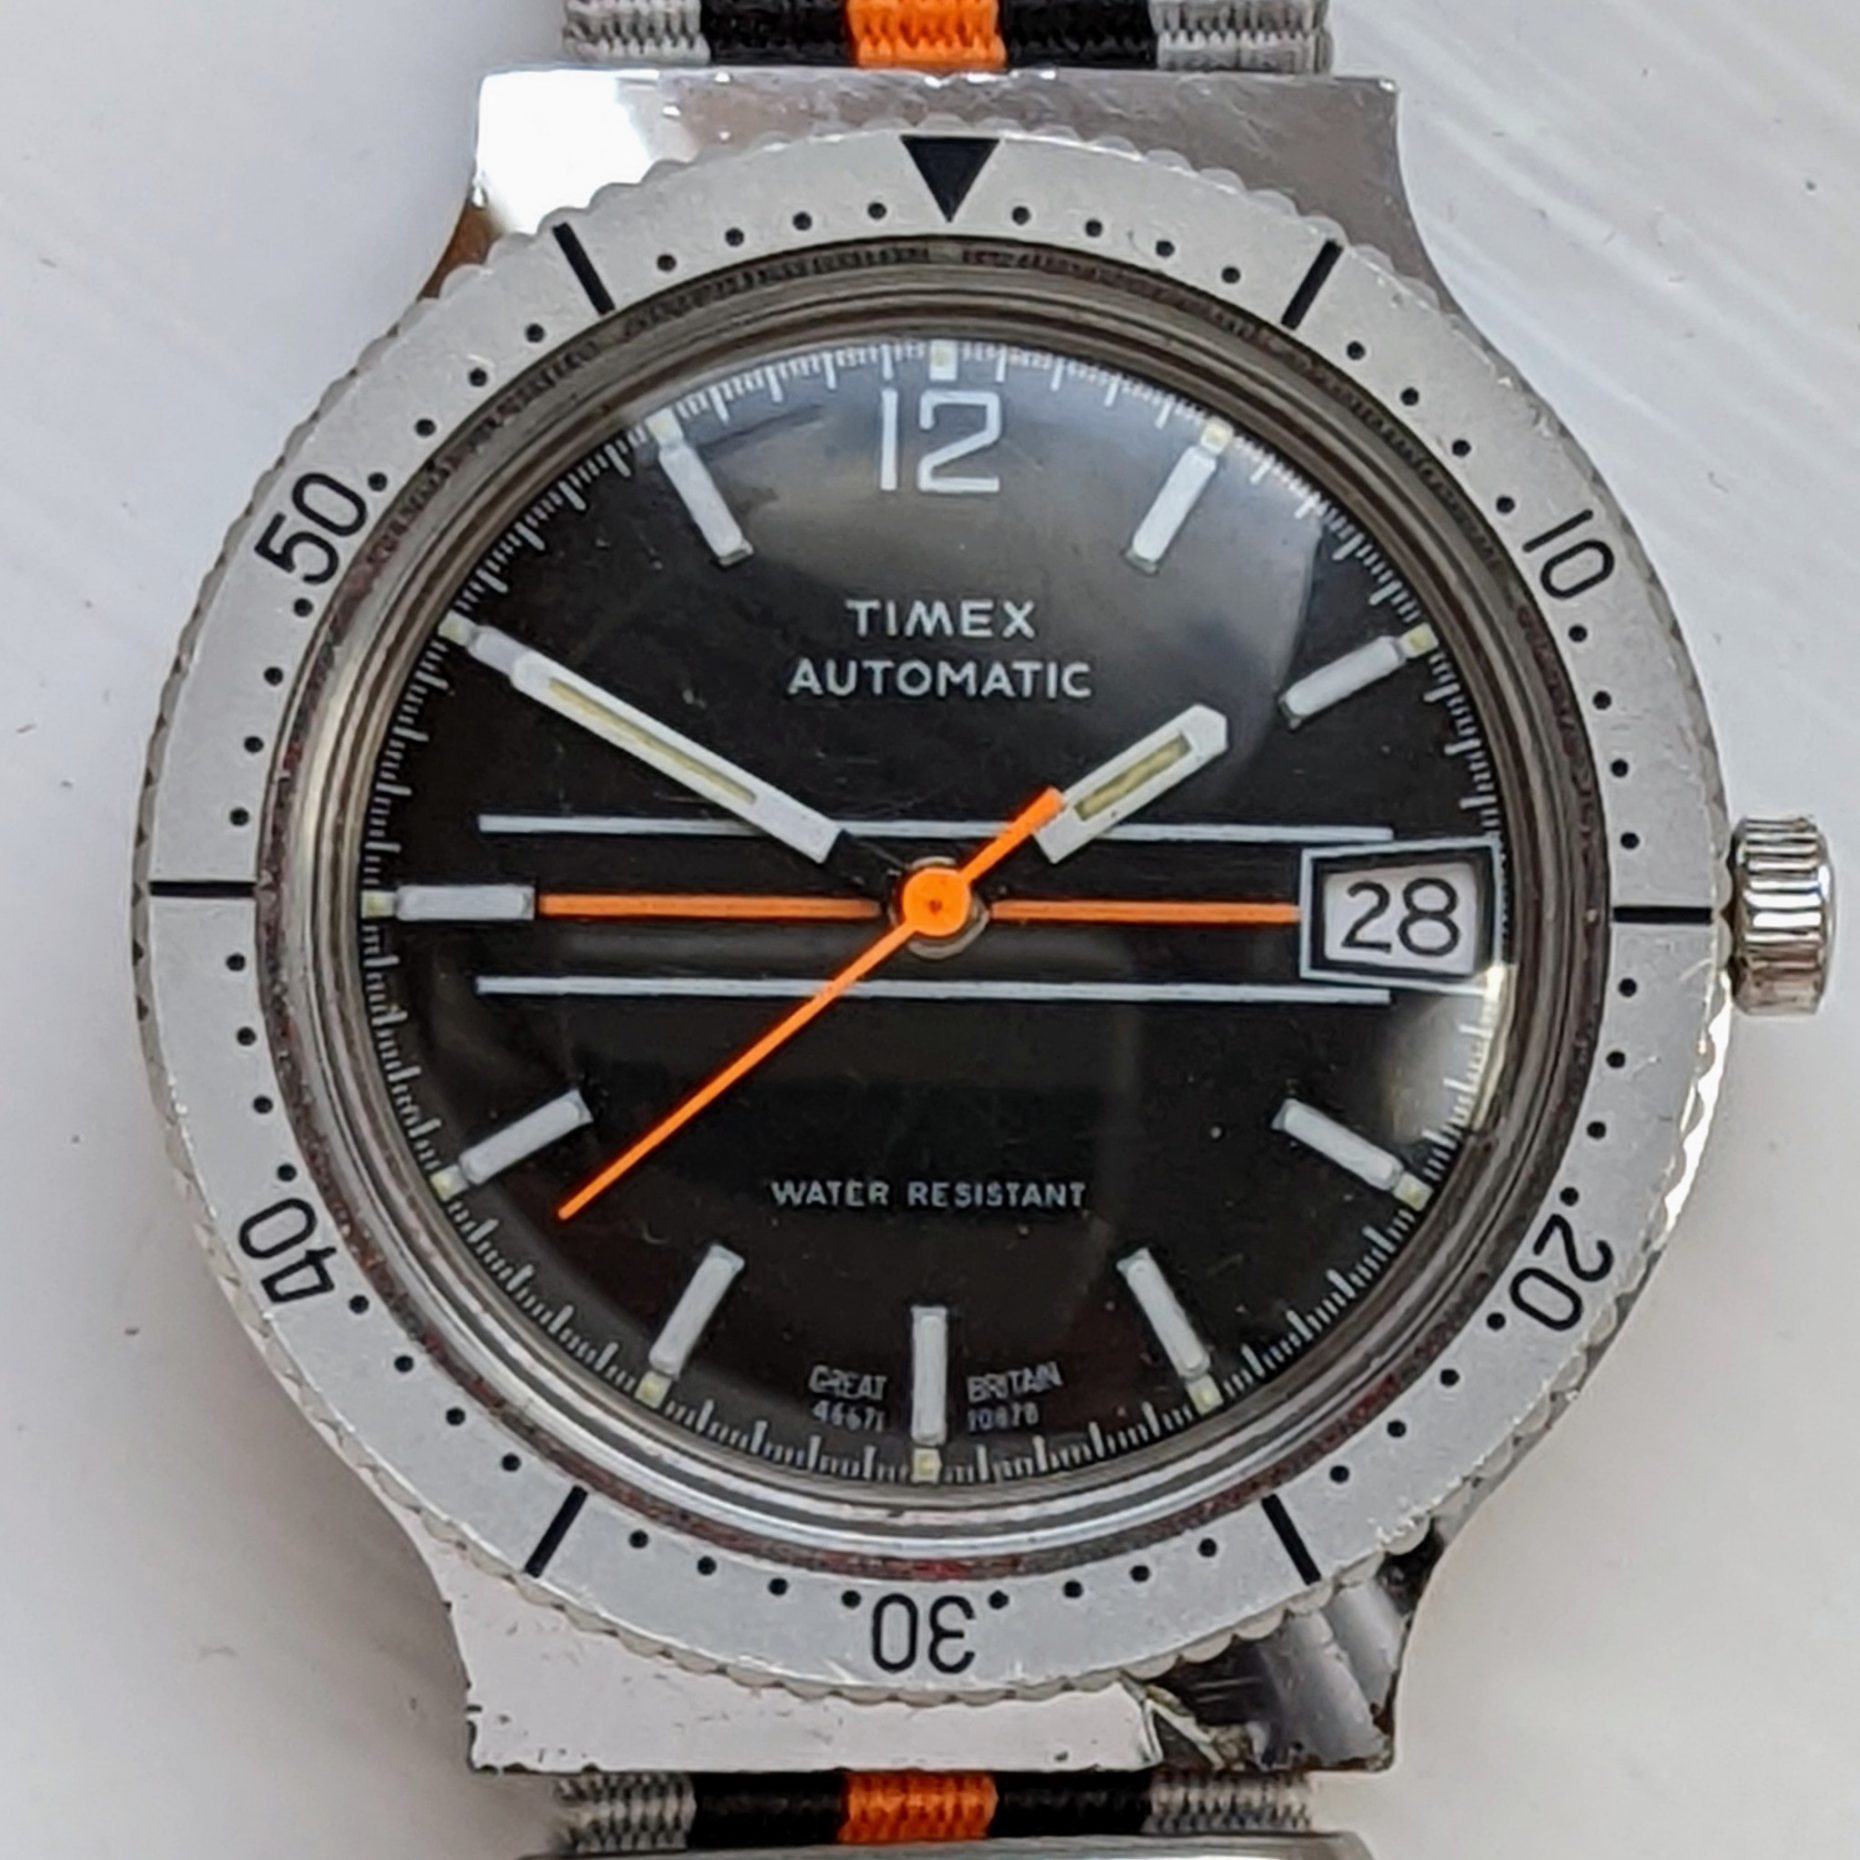 Timex Viscount Dive Watch 46671 10878 [1978]